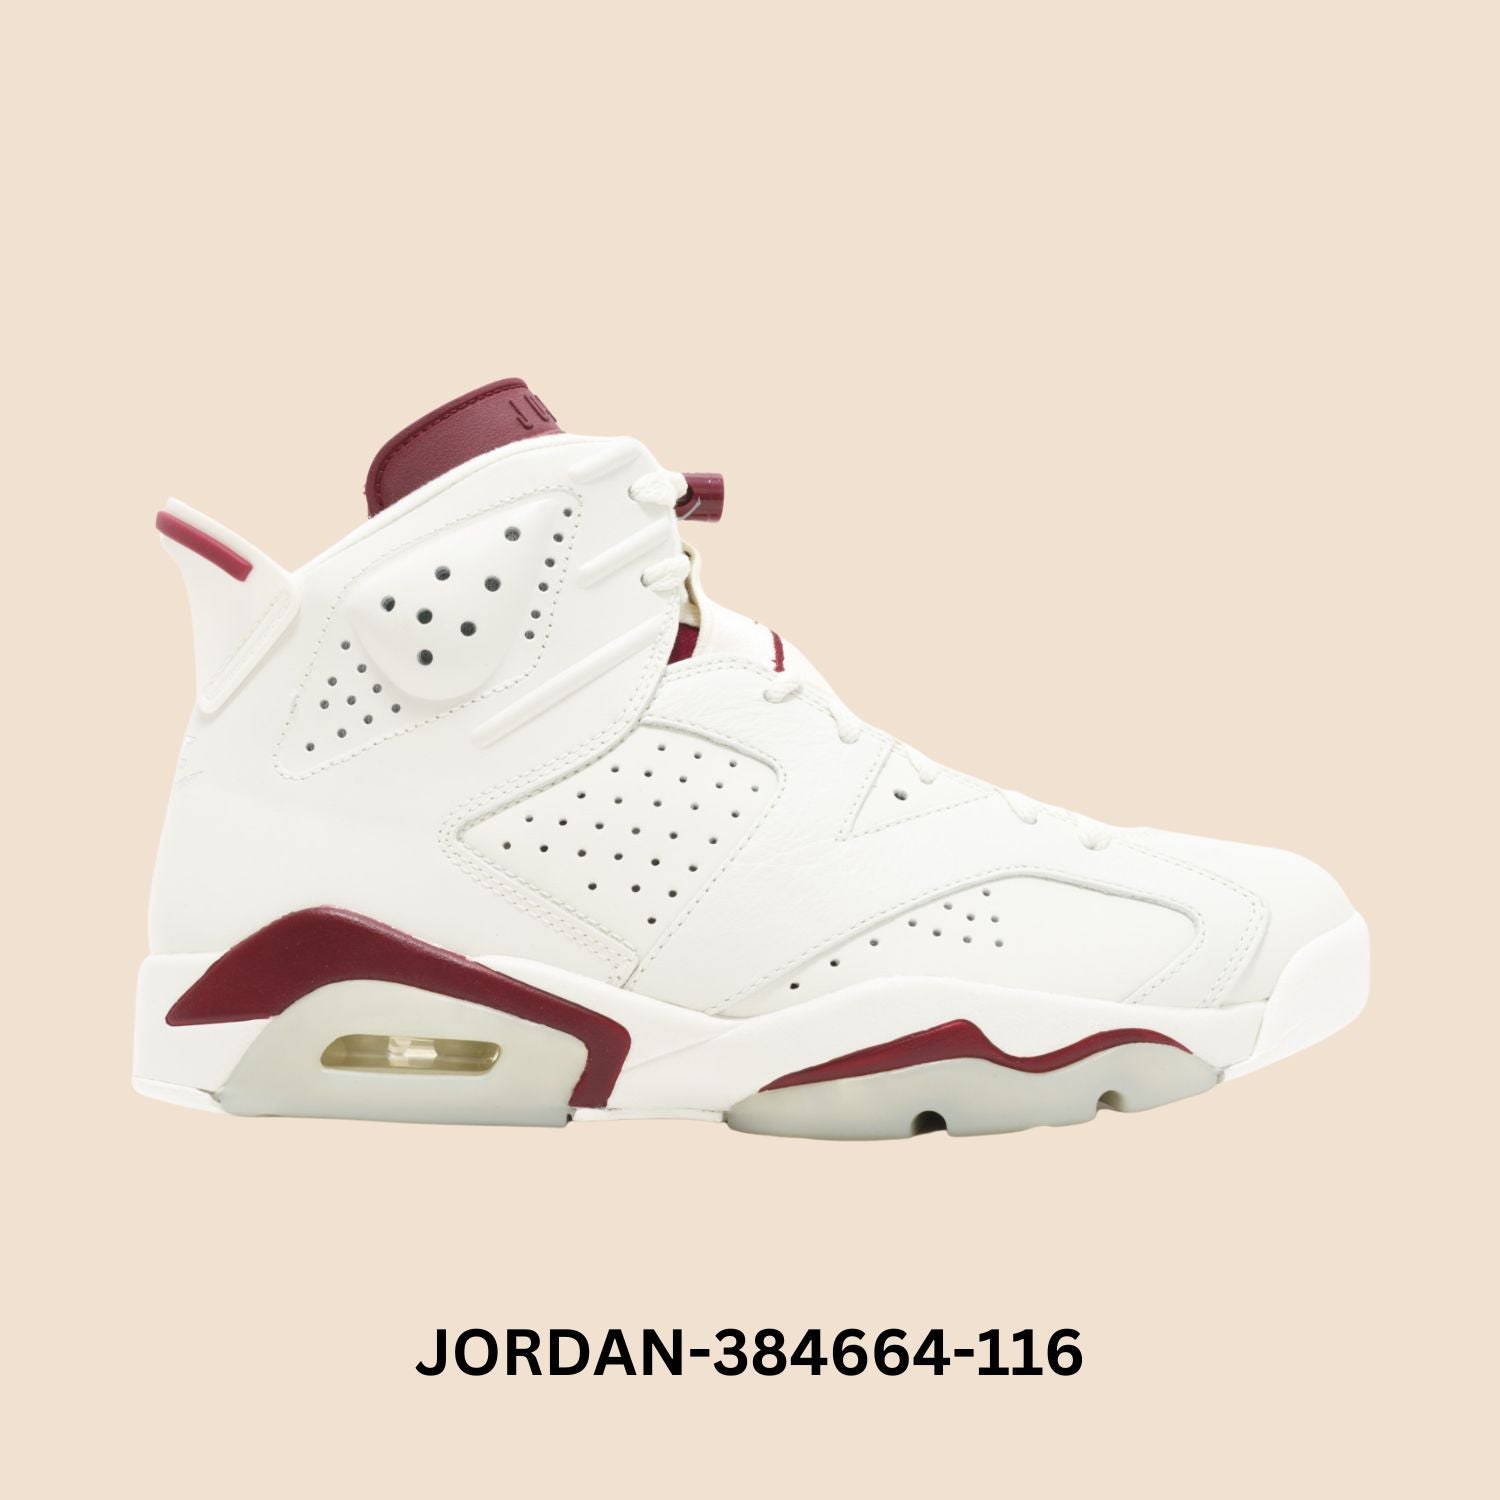 Air Jordan 6 Retro "MAROON" Men's Style# 384664-116